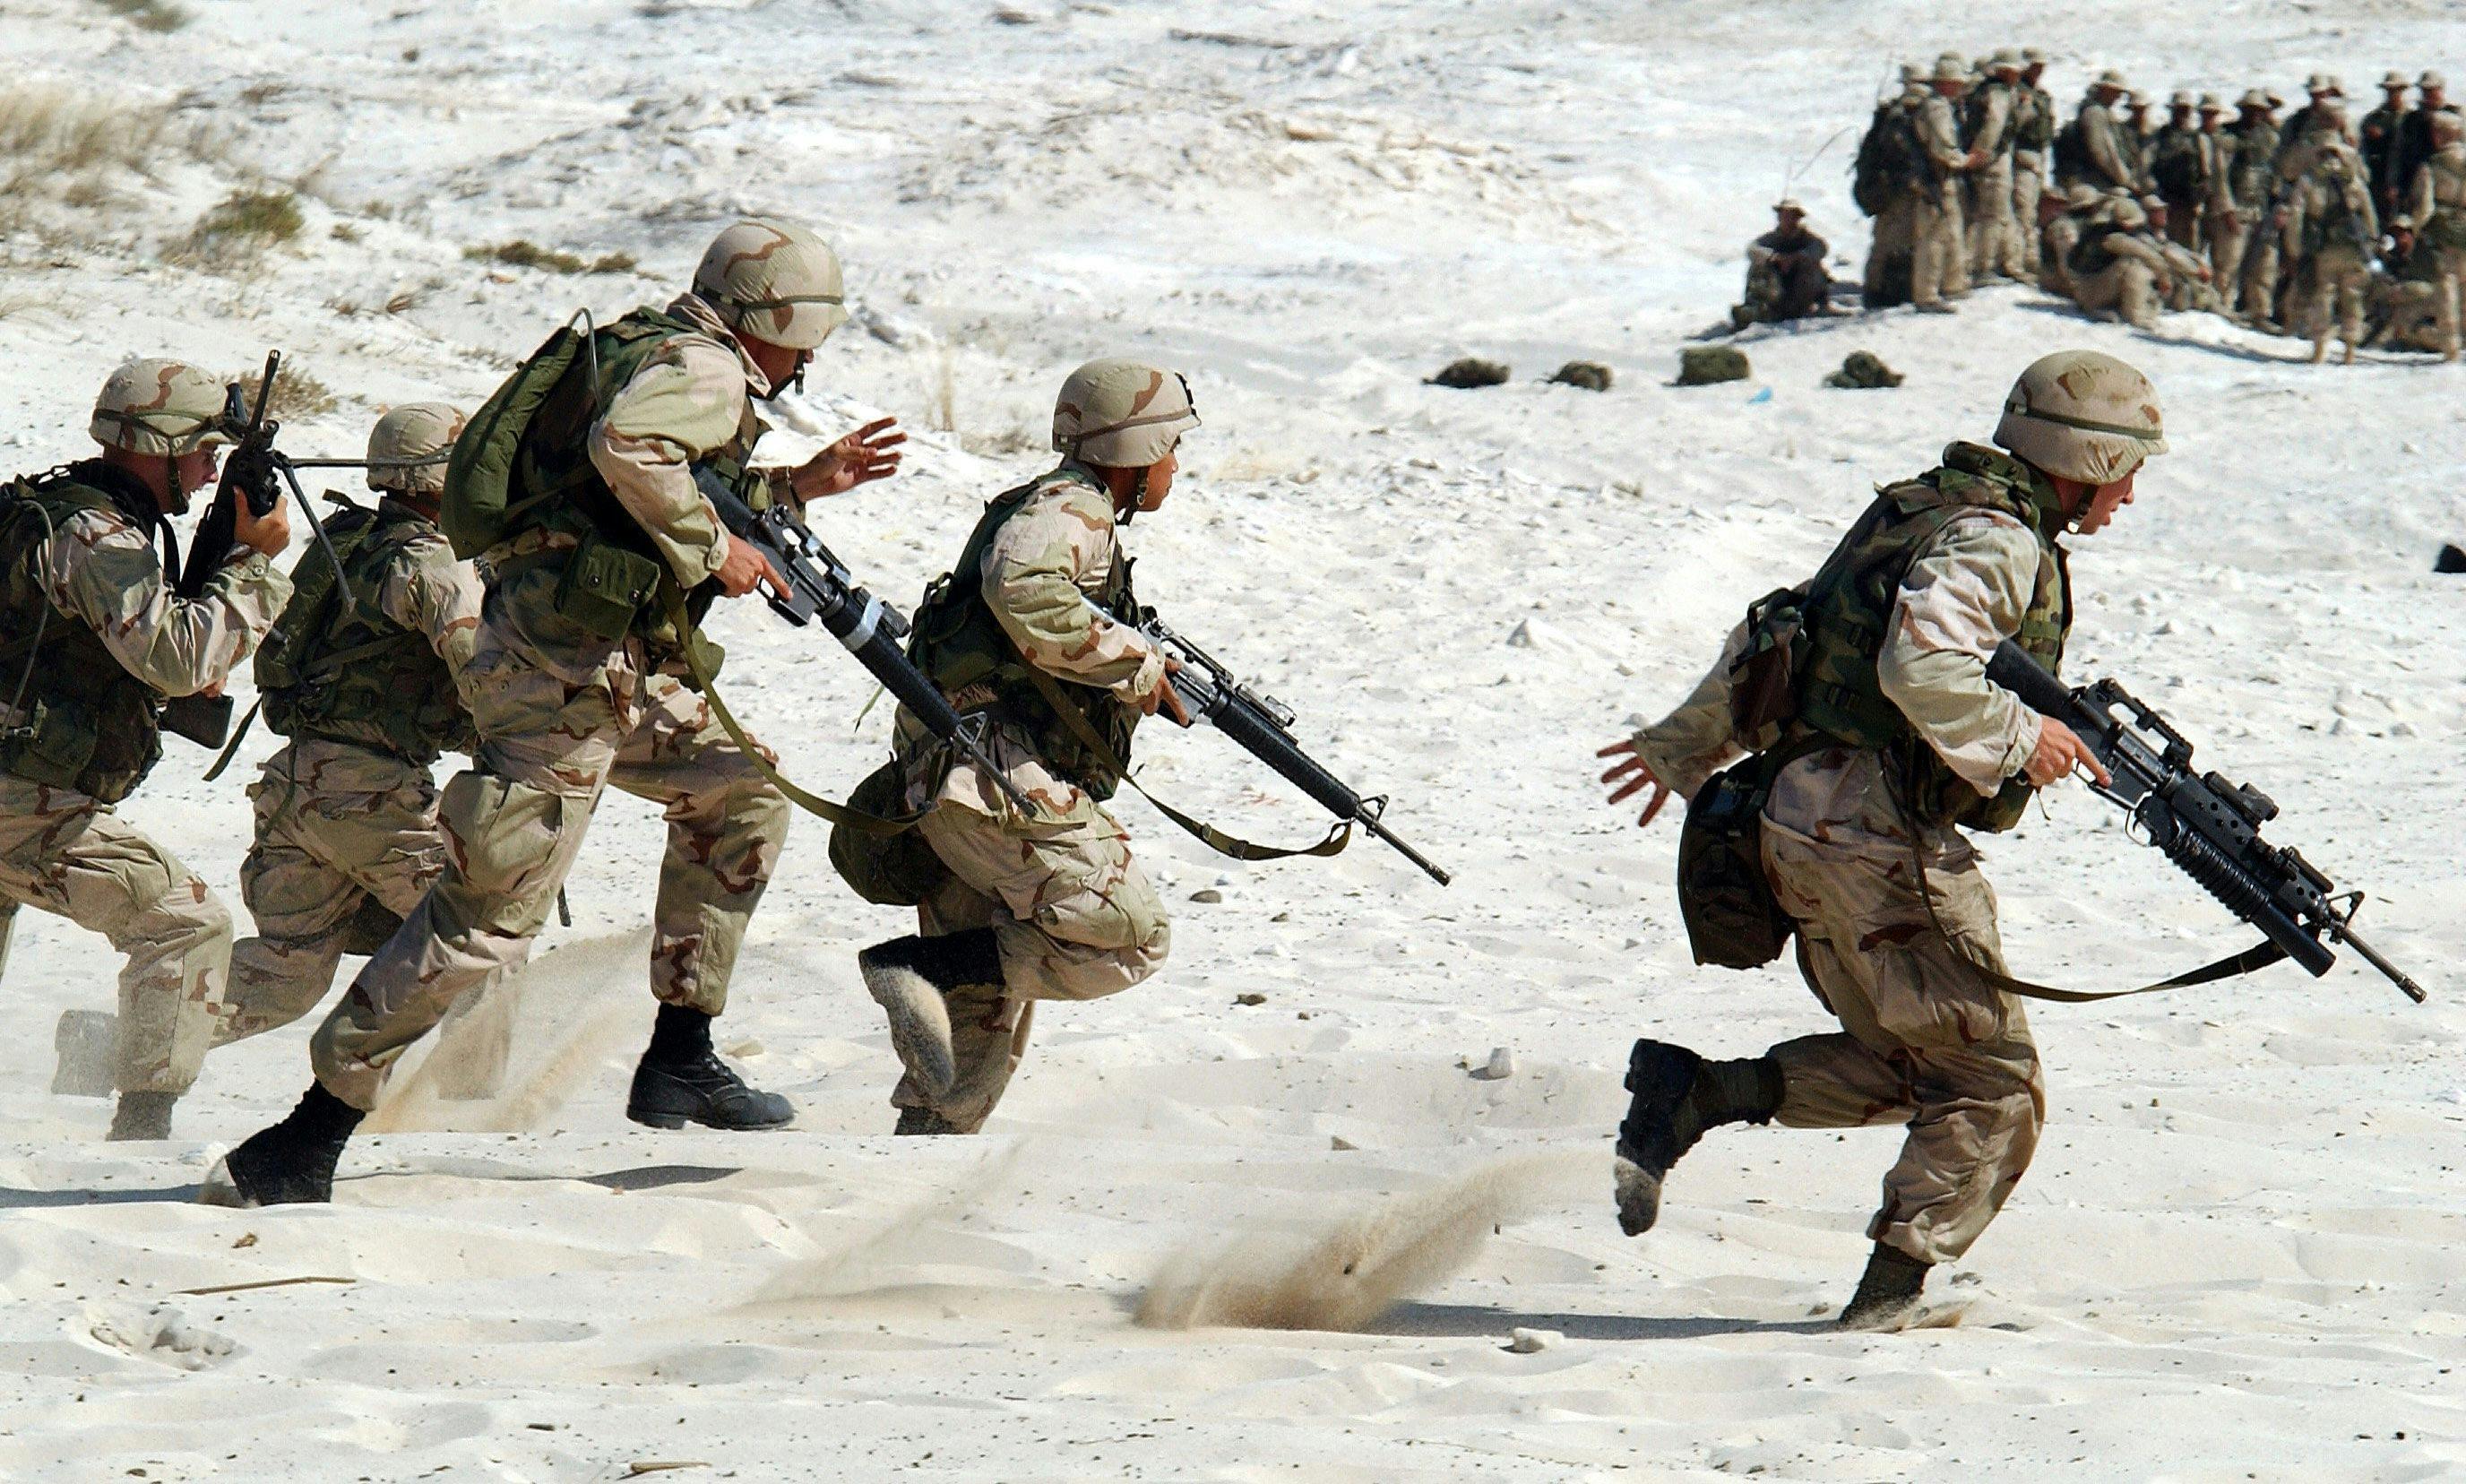 soldiers-military-usa-weapons-87772.jpeg?cs=srgb&dl=pexels-pixabay-87772.jpg&fm=jpg